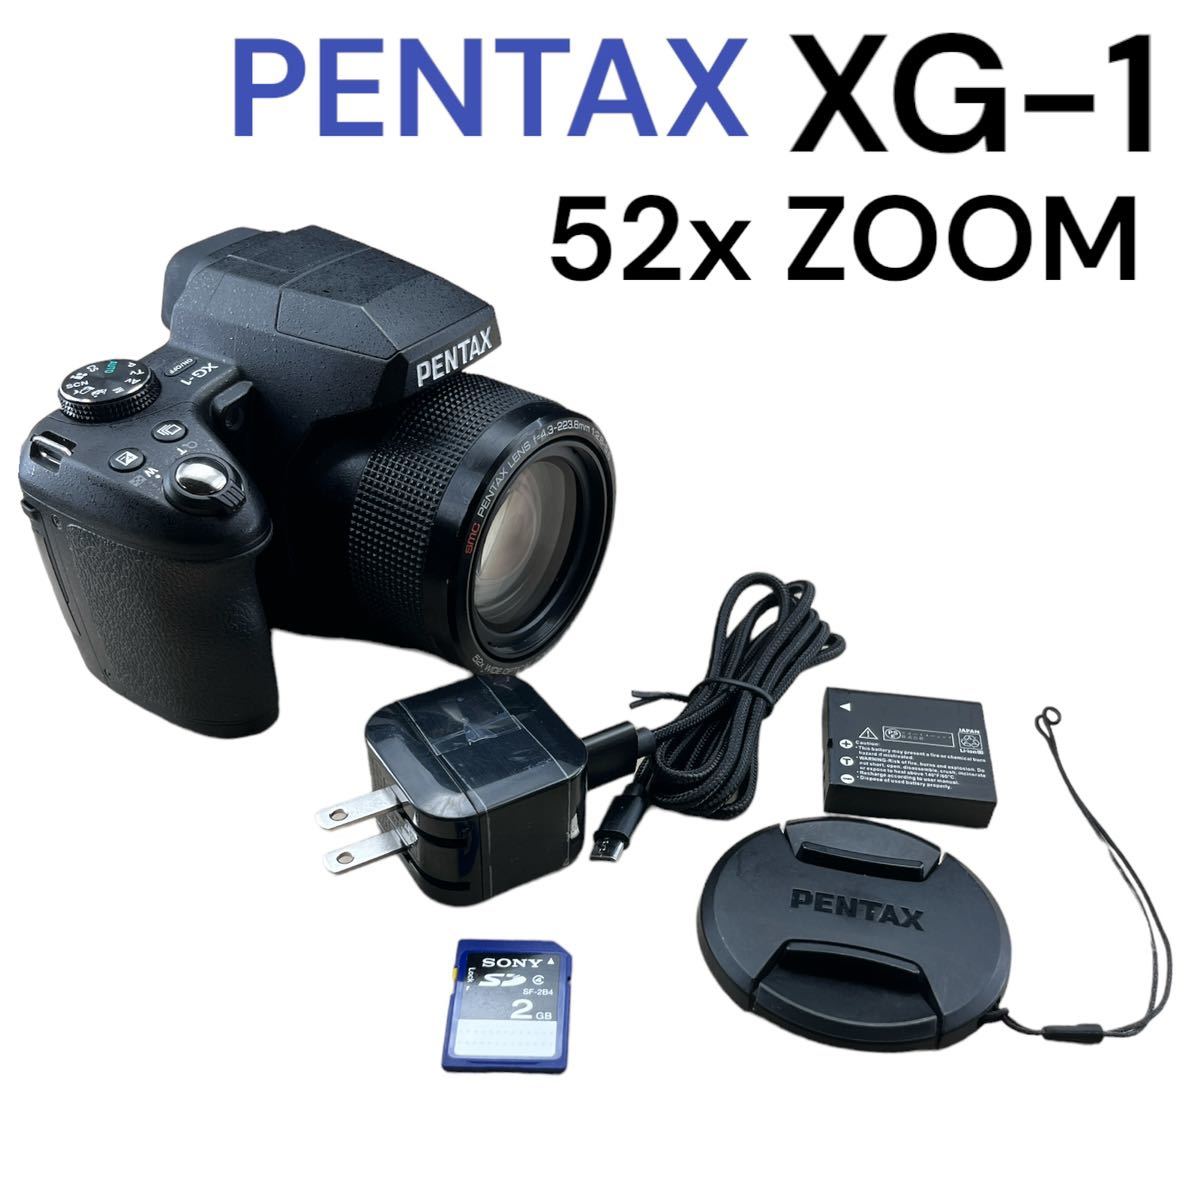 『52倍ズーム ネオ一眼』PENTAX XG-1 smc PENTAX 4.3-223.6mm 1:2.8-5.6 動作 美品 _画像8